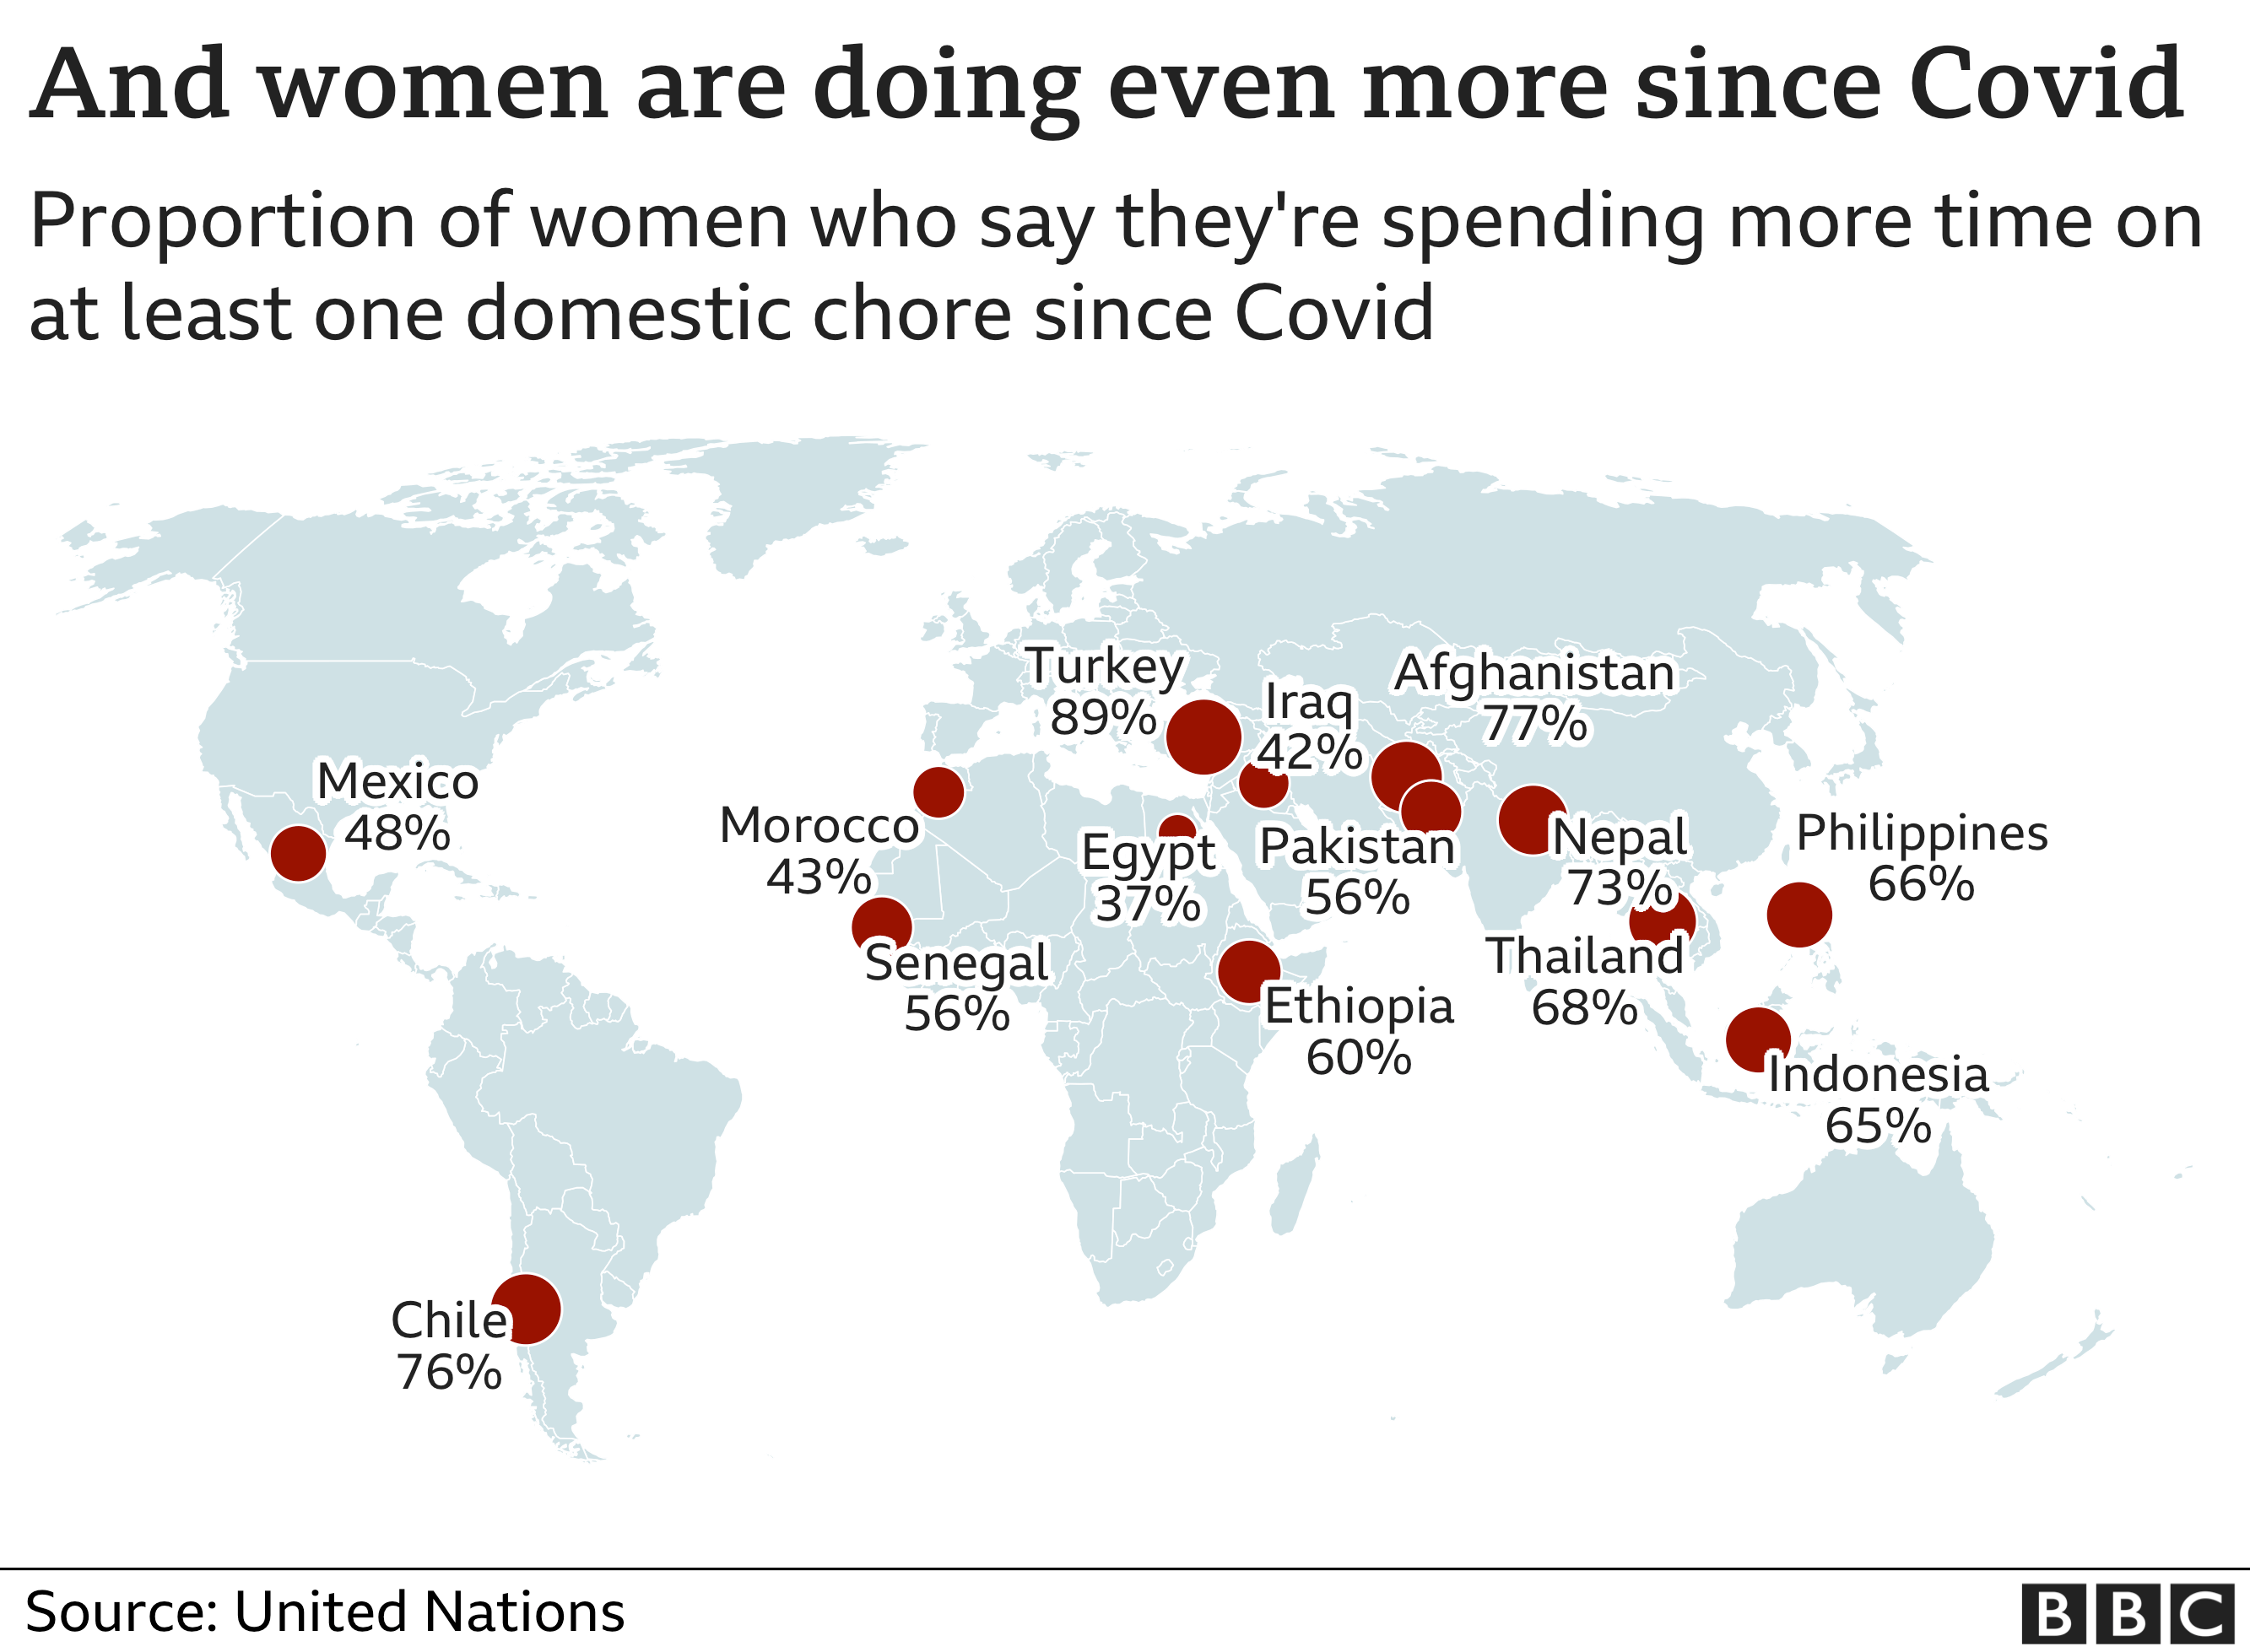 Peta yang menunjukkan proporsi perempuan melakukan lebih banyak pekerjaan rumah tangga sejak covid-19 di suatu negara